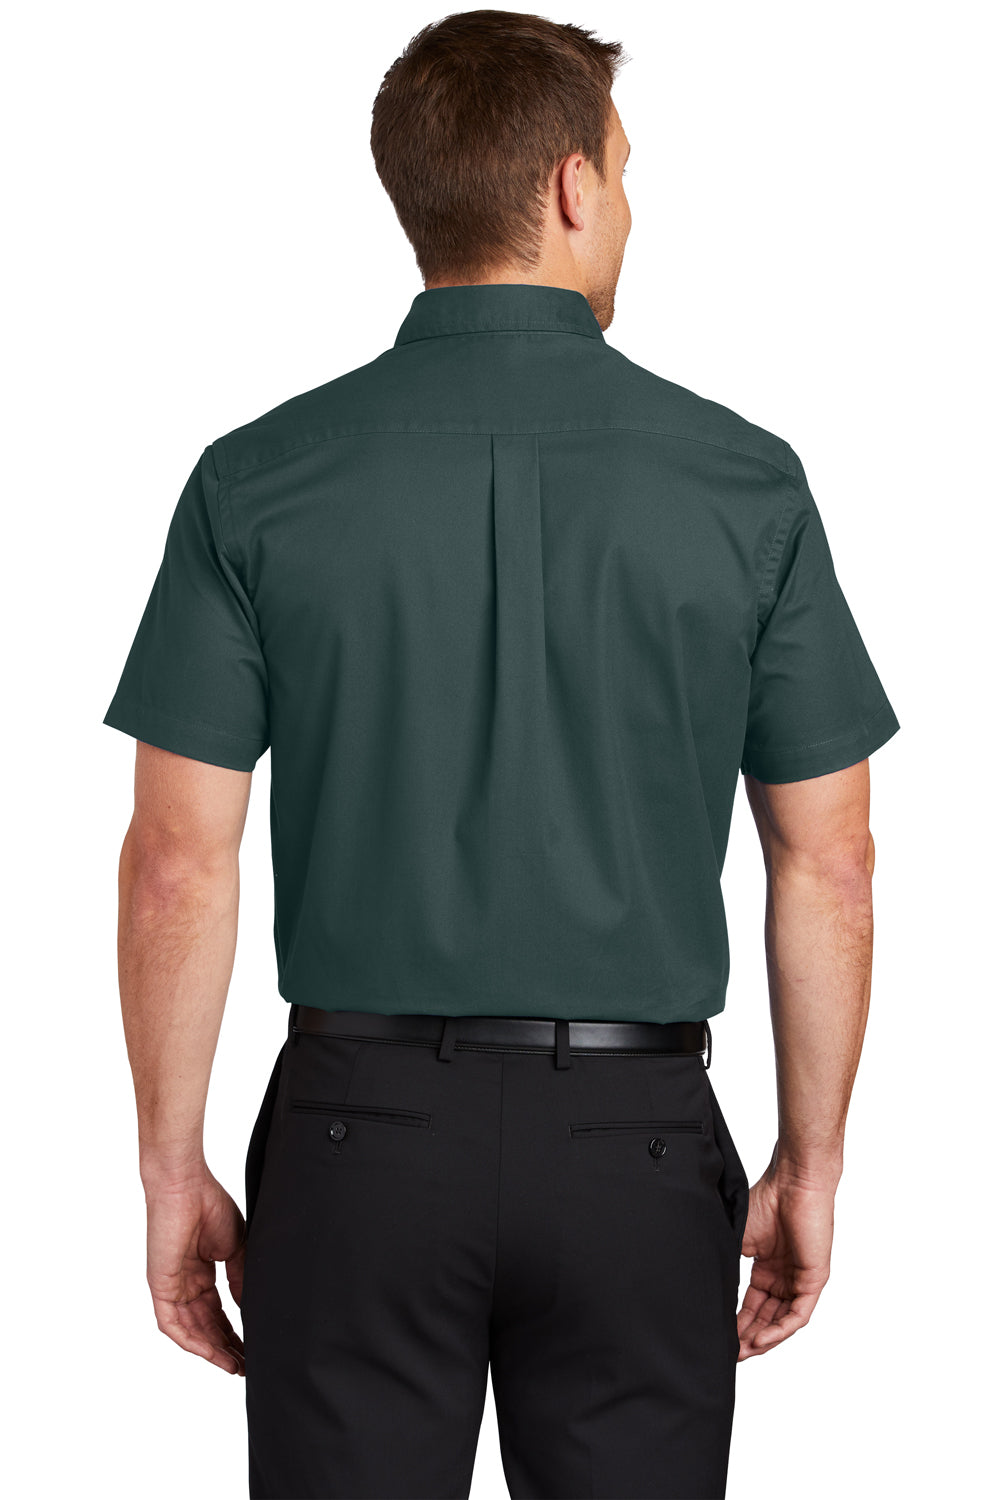 Port Authority S508/TLS508 Mens Easy Care Wrinkle Resistant Short Sleeve Button Down Shirt w/ Pocket Dark Green Back